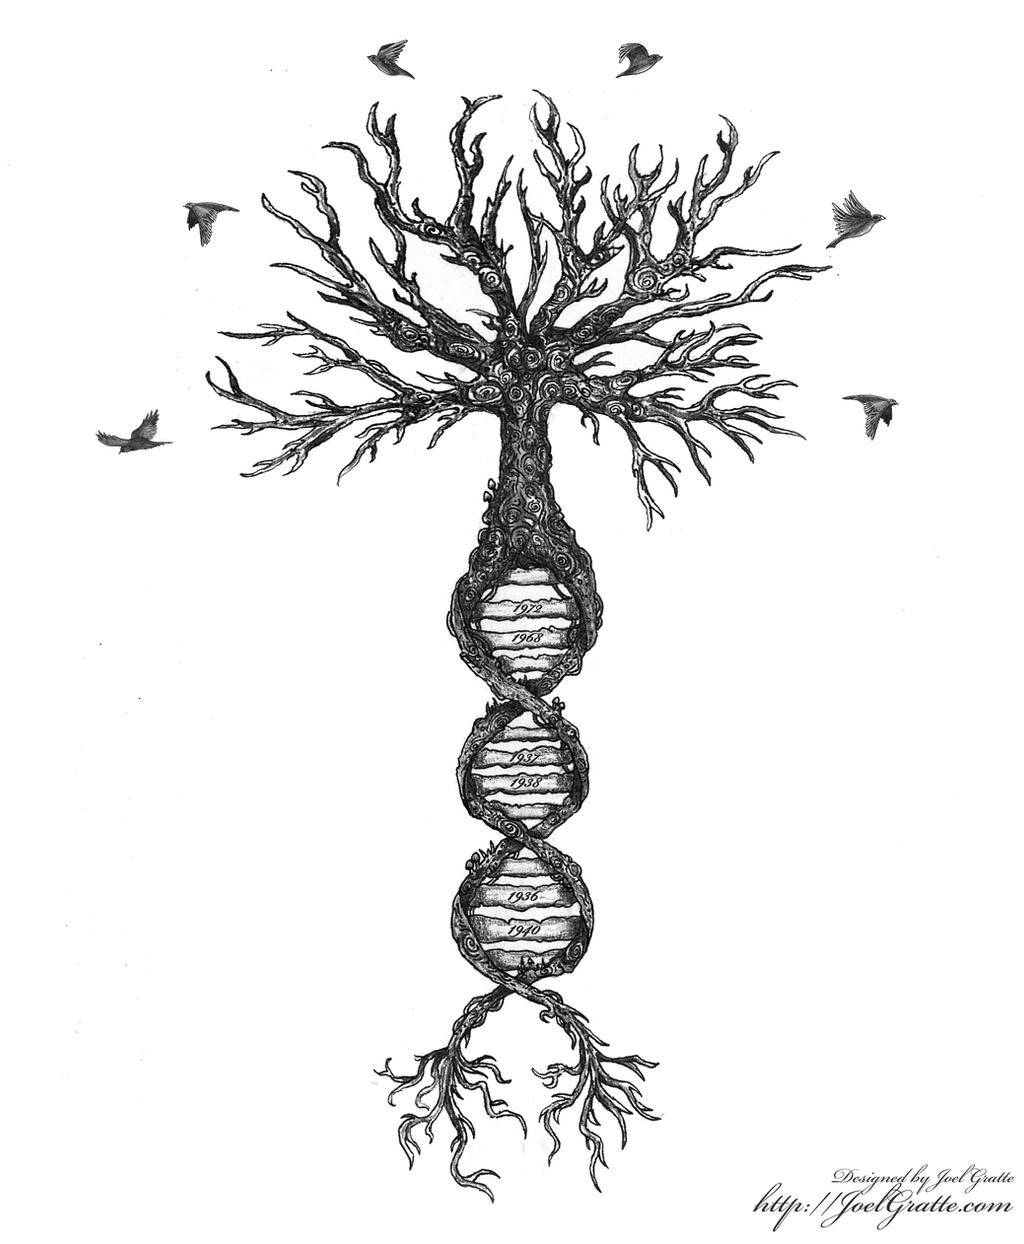 Family Tree Tattoo Design by sur-mata on DeviantArt